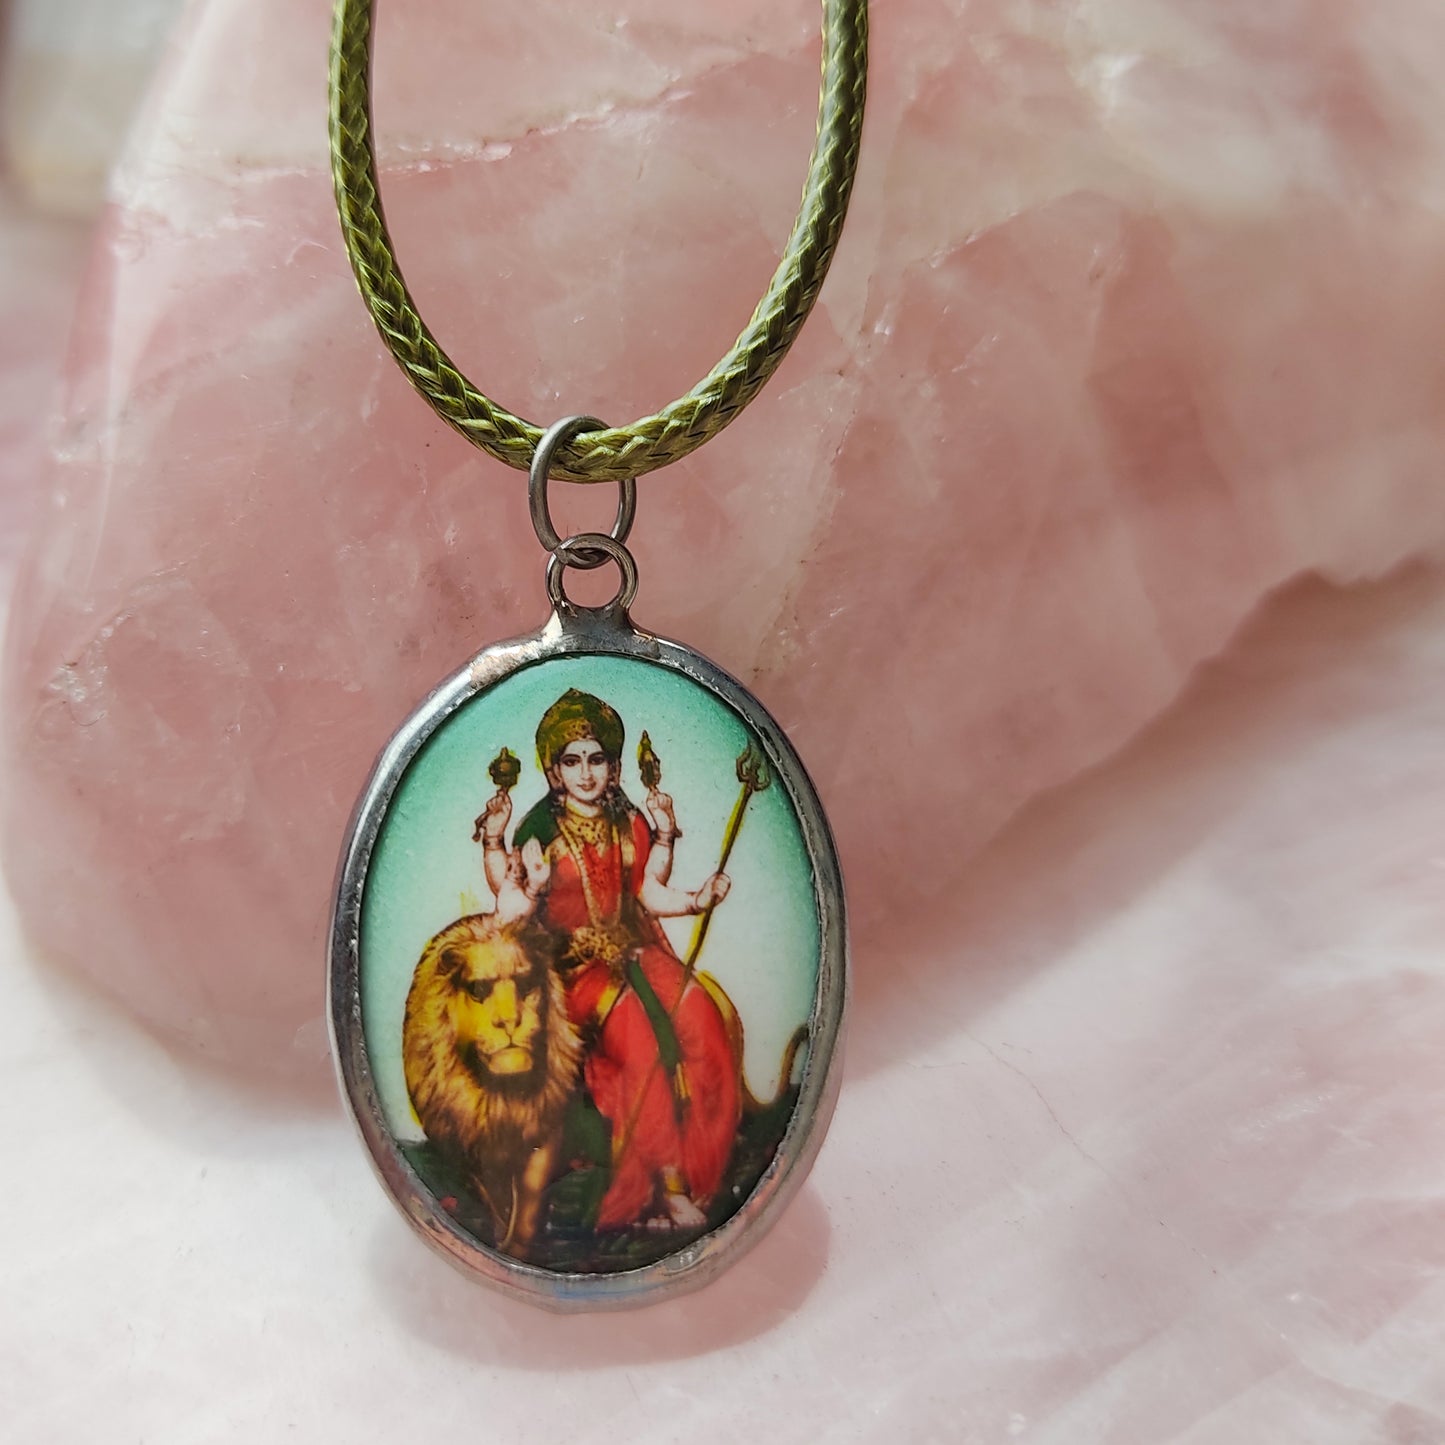 Durga Maa Goddess Om Pendant Necklace 18" Green Cord Chain Religious Gift